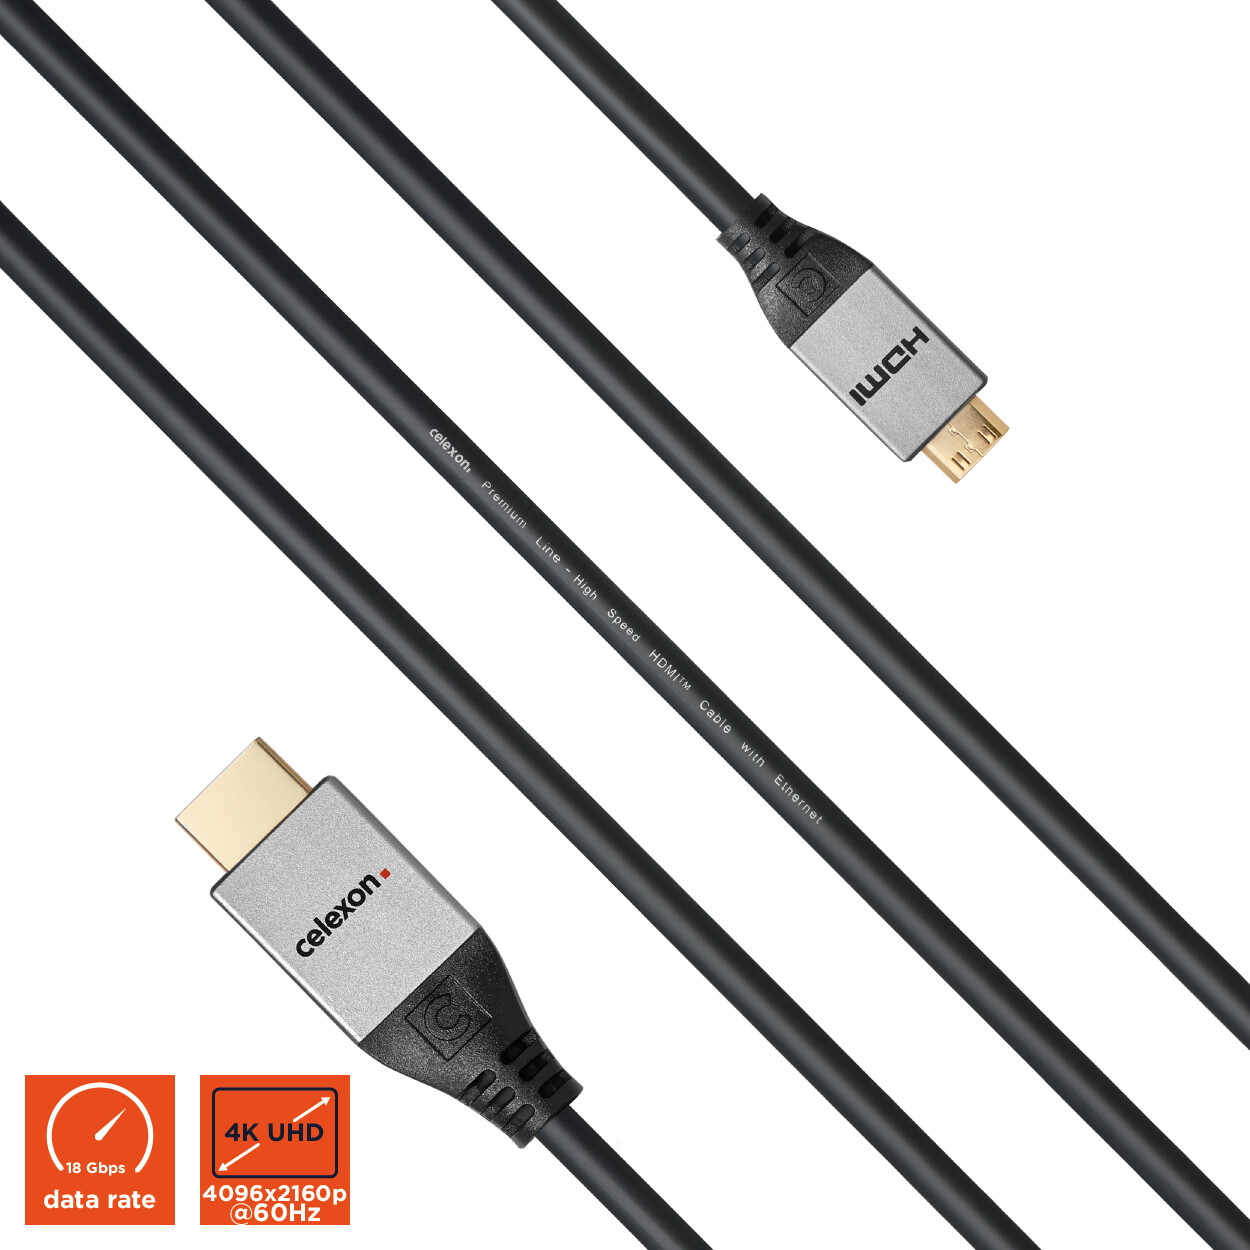 celexon-HDMI-naar-Mini-HDMI-Kabel-met-Ethernet-2-0a-b-4K-3-0m-Professional-Lijn